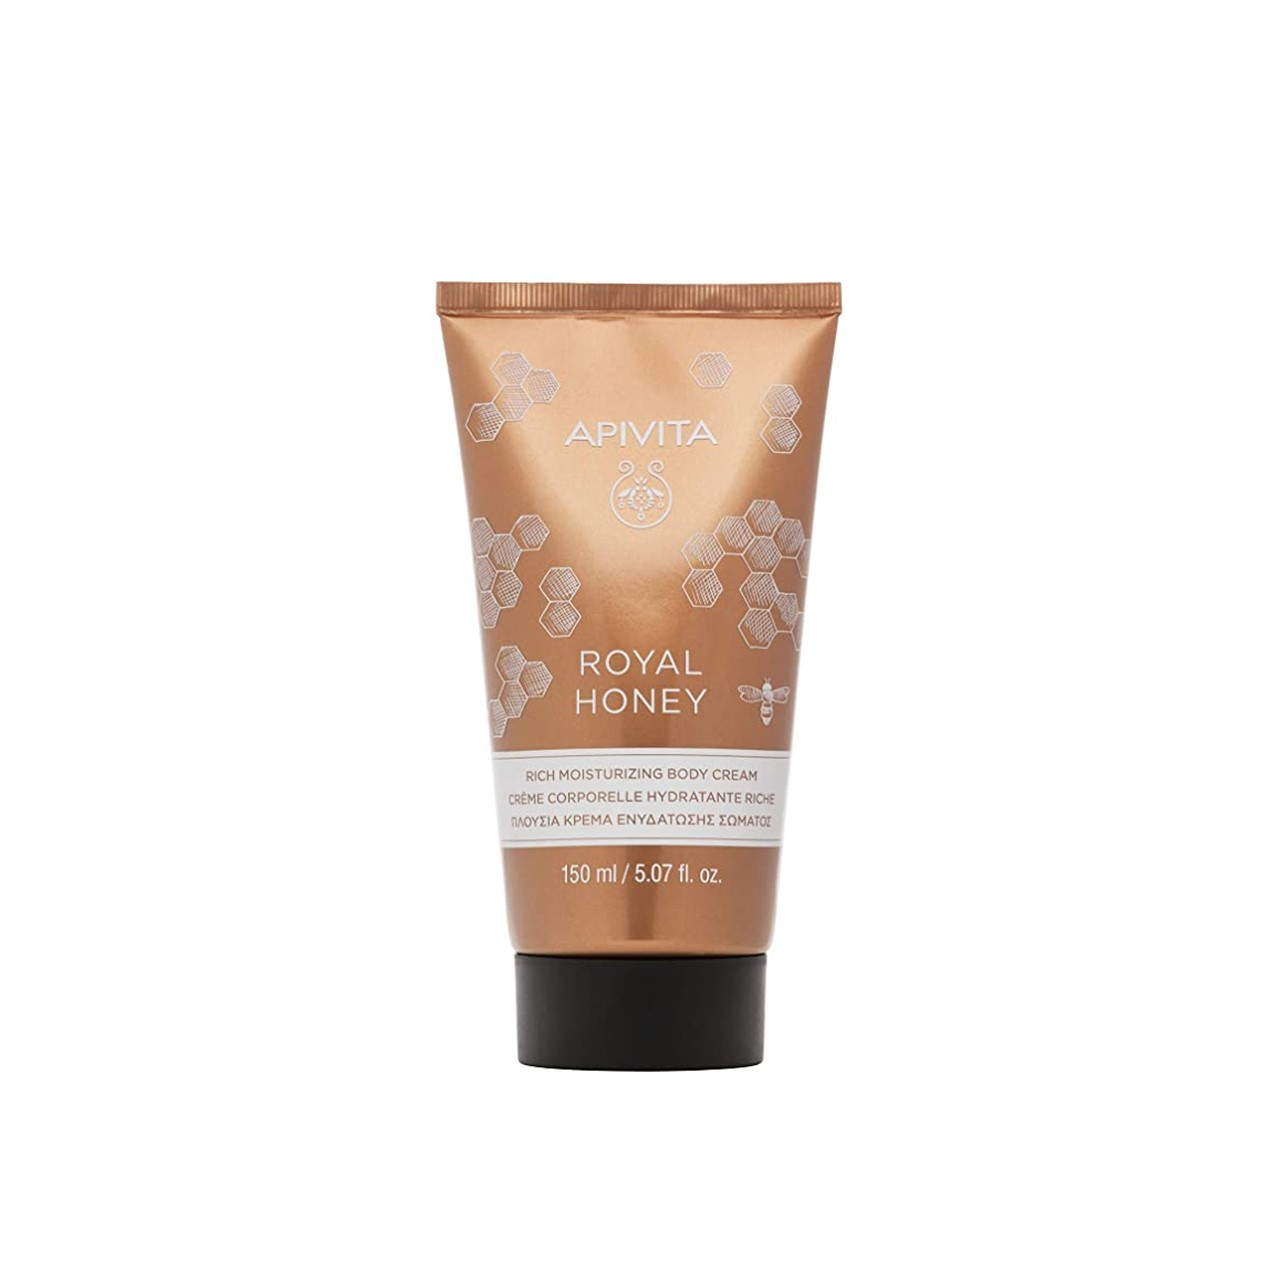 APIVITA Royal Honey Rich Moisturizing Body Cream 150ml (5.07fl oz)